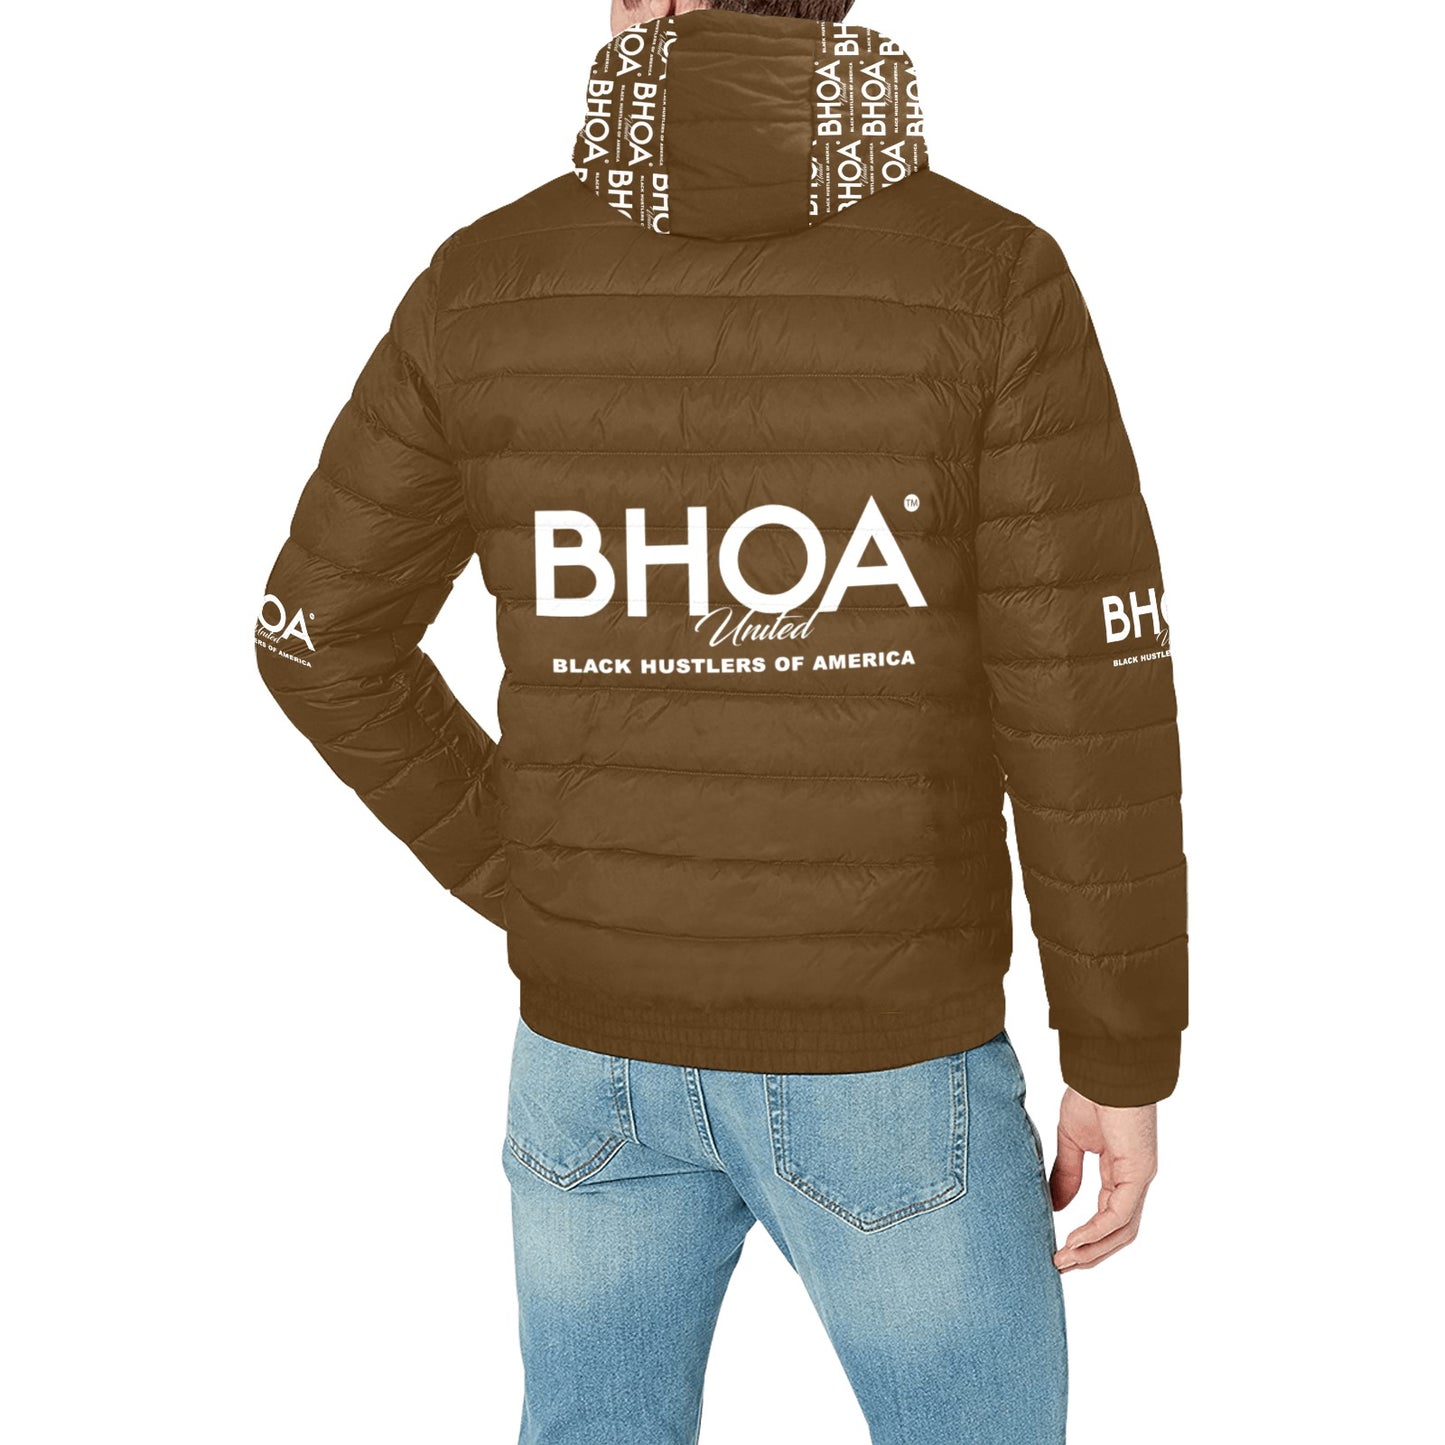 BHOA United Men's Padded Hooded Jacket